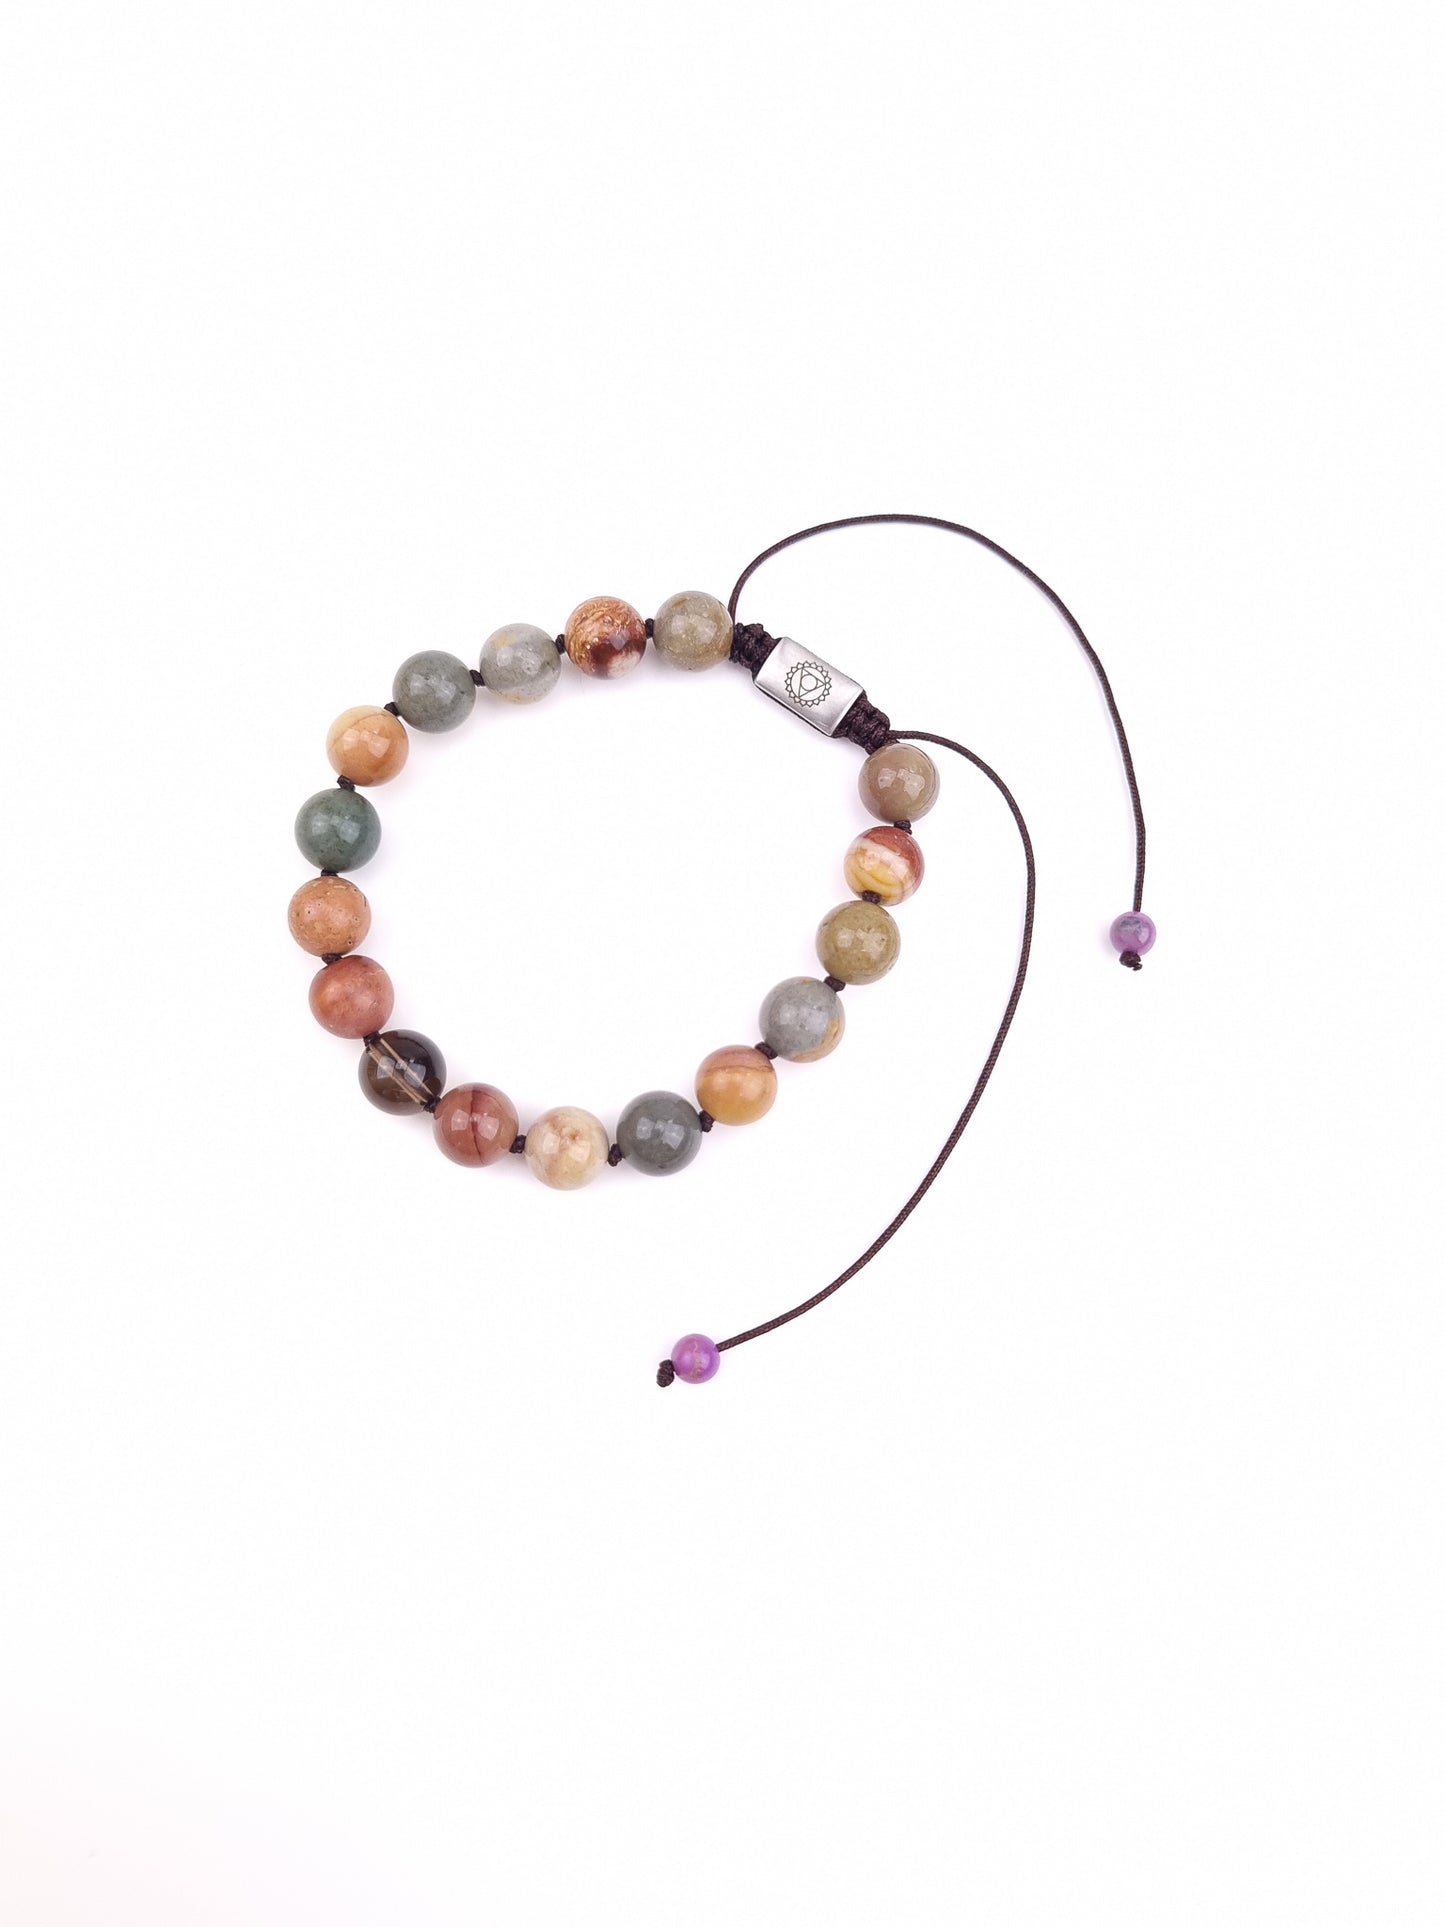 Mantra bracelet - 'I create calm balance in body and mind'